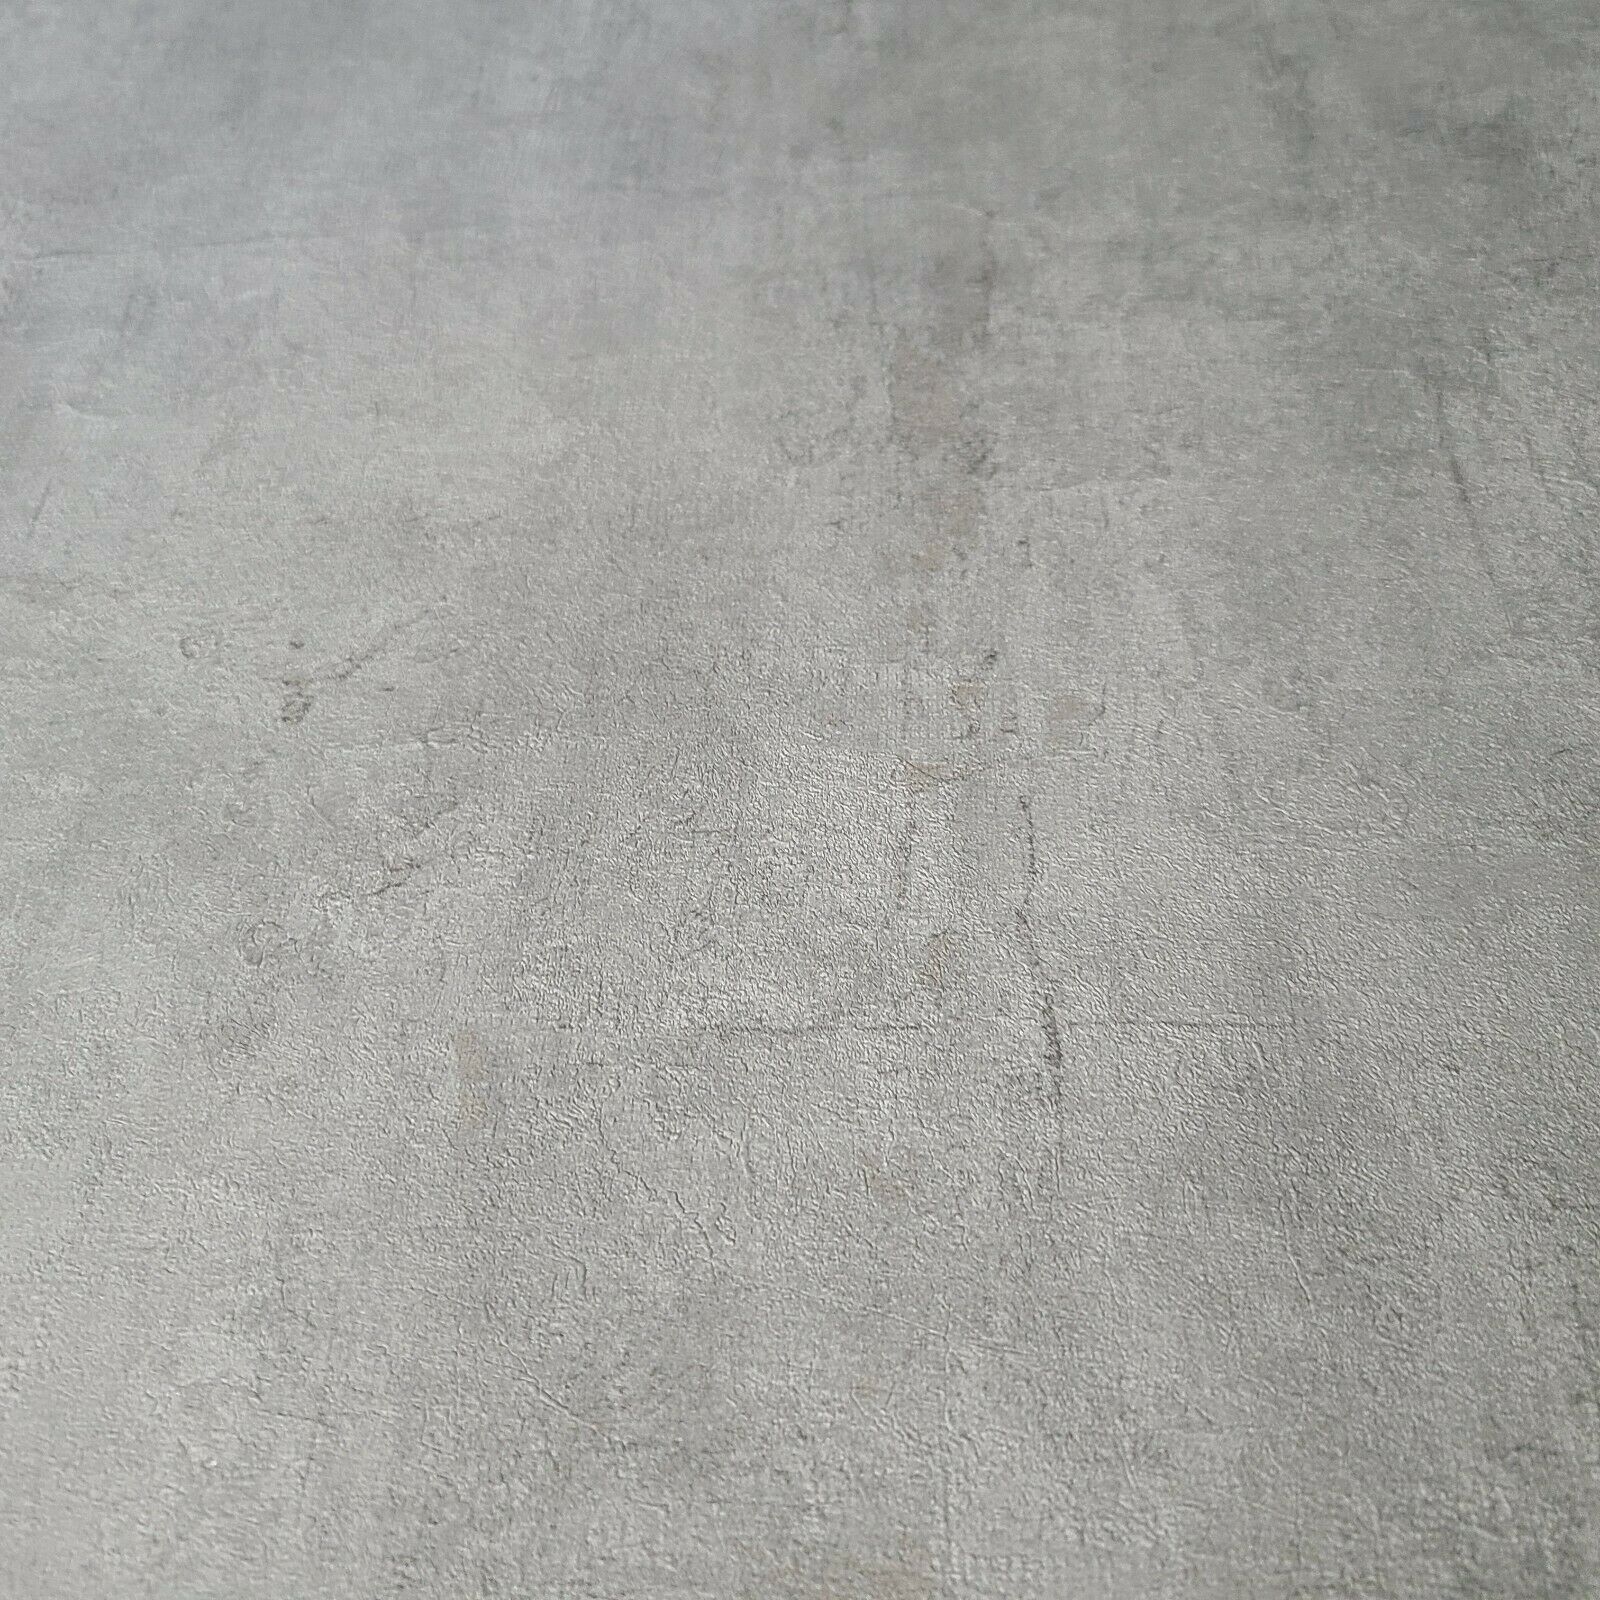 light gray concrete texture